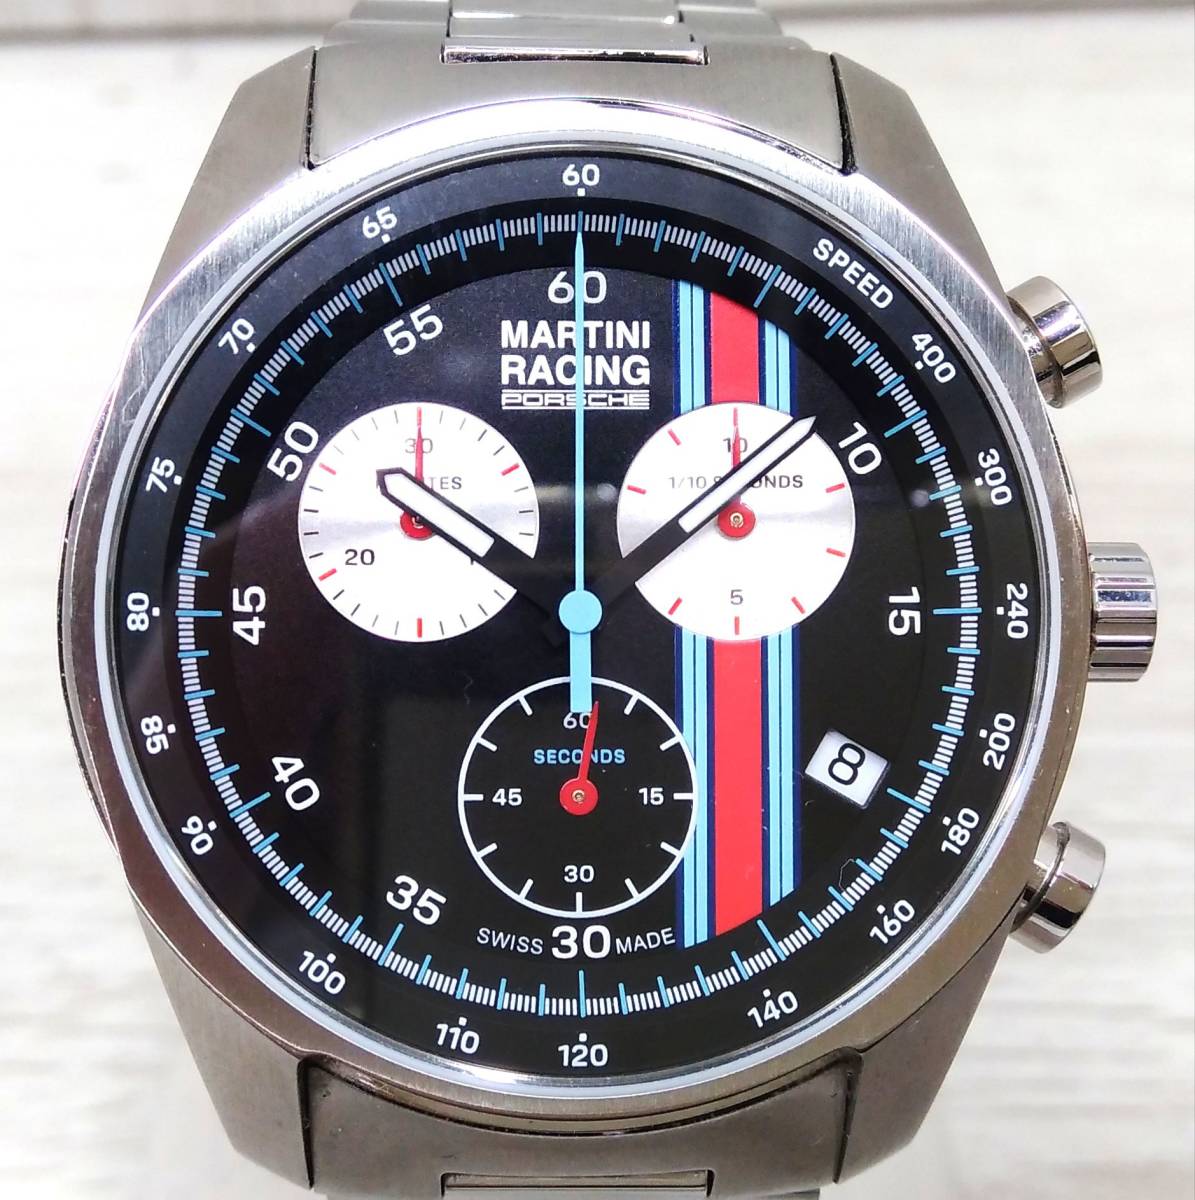 Porsche Watch ポルシェ デザイン スポーツ クロノグラフ マルティニ レーシング ブラック / スチール クォーツ 腕時計 箱・取説あり